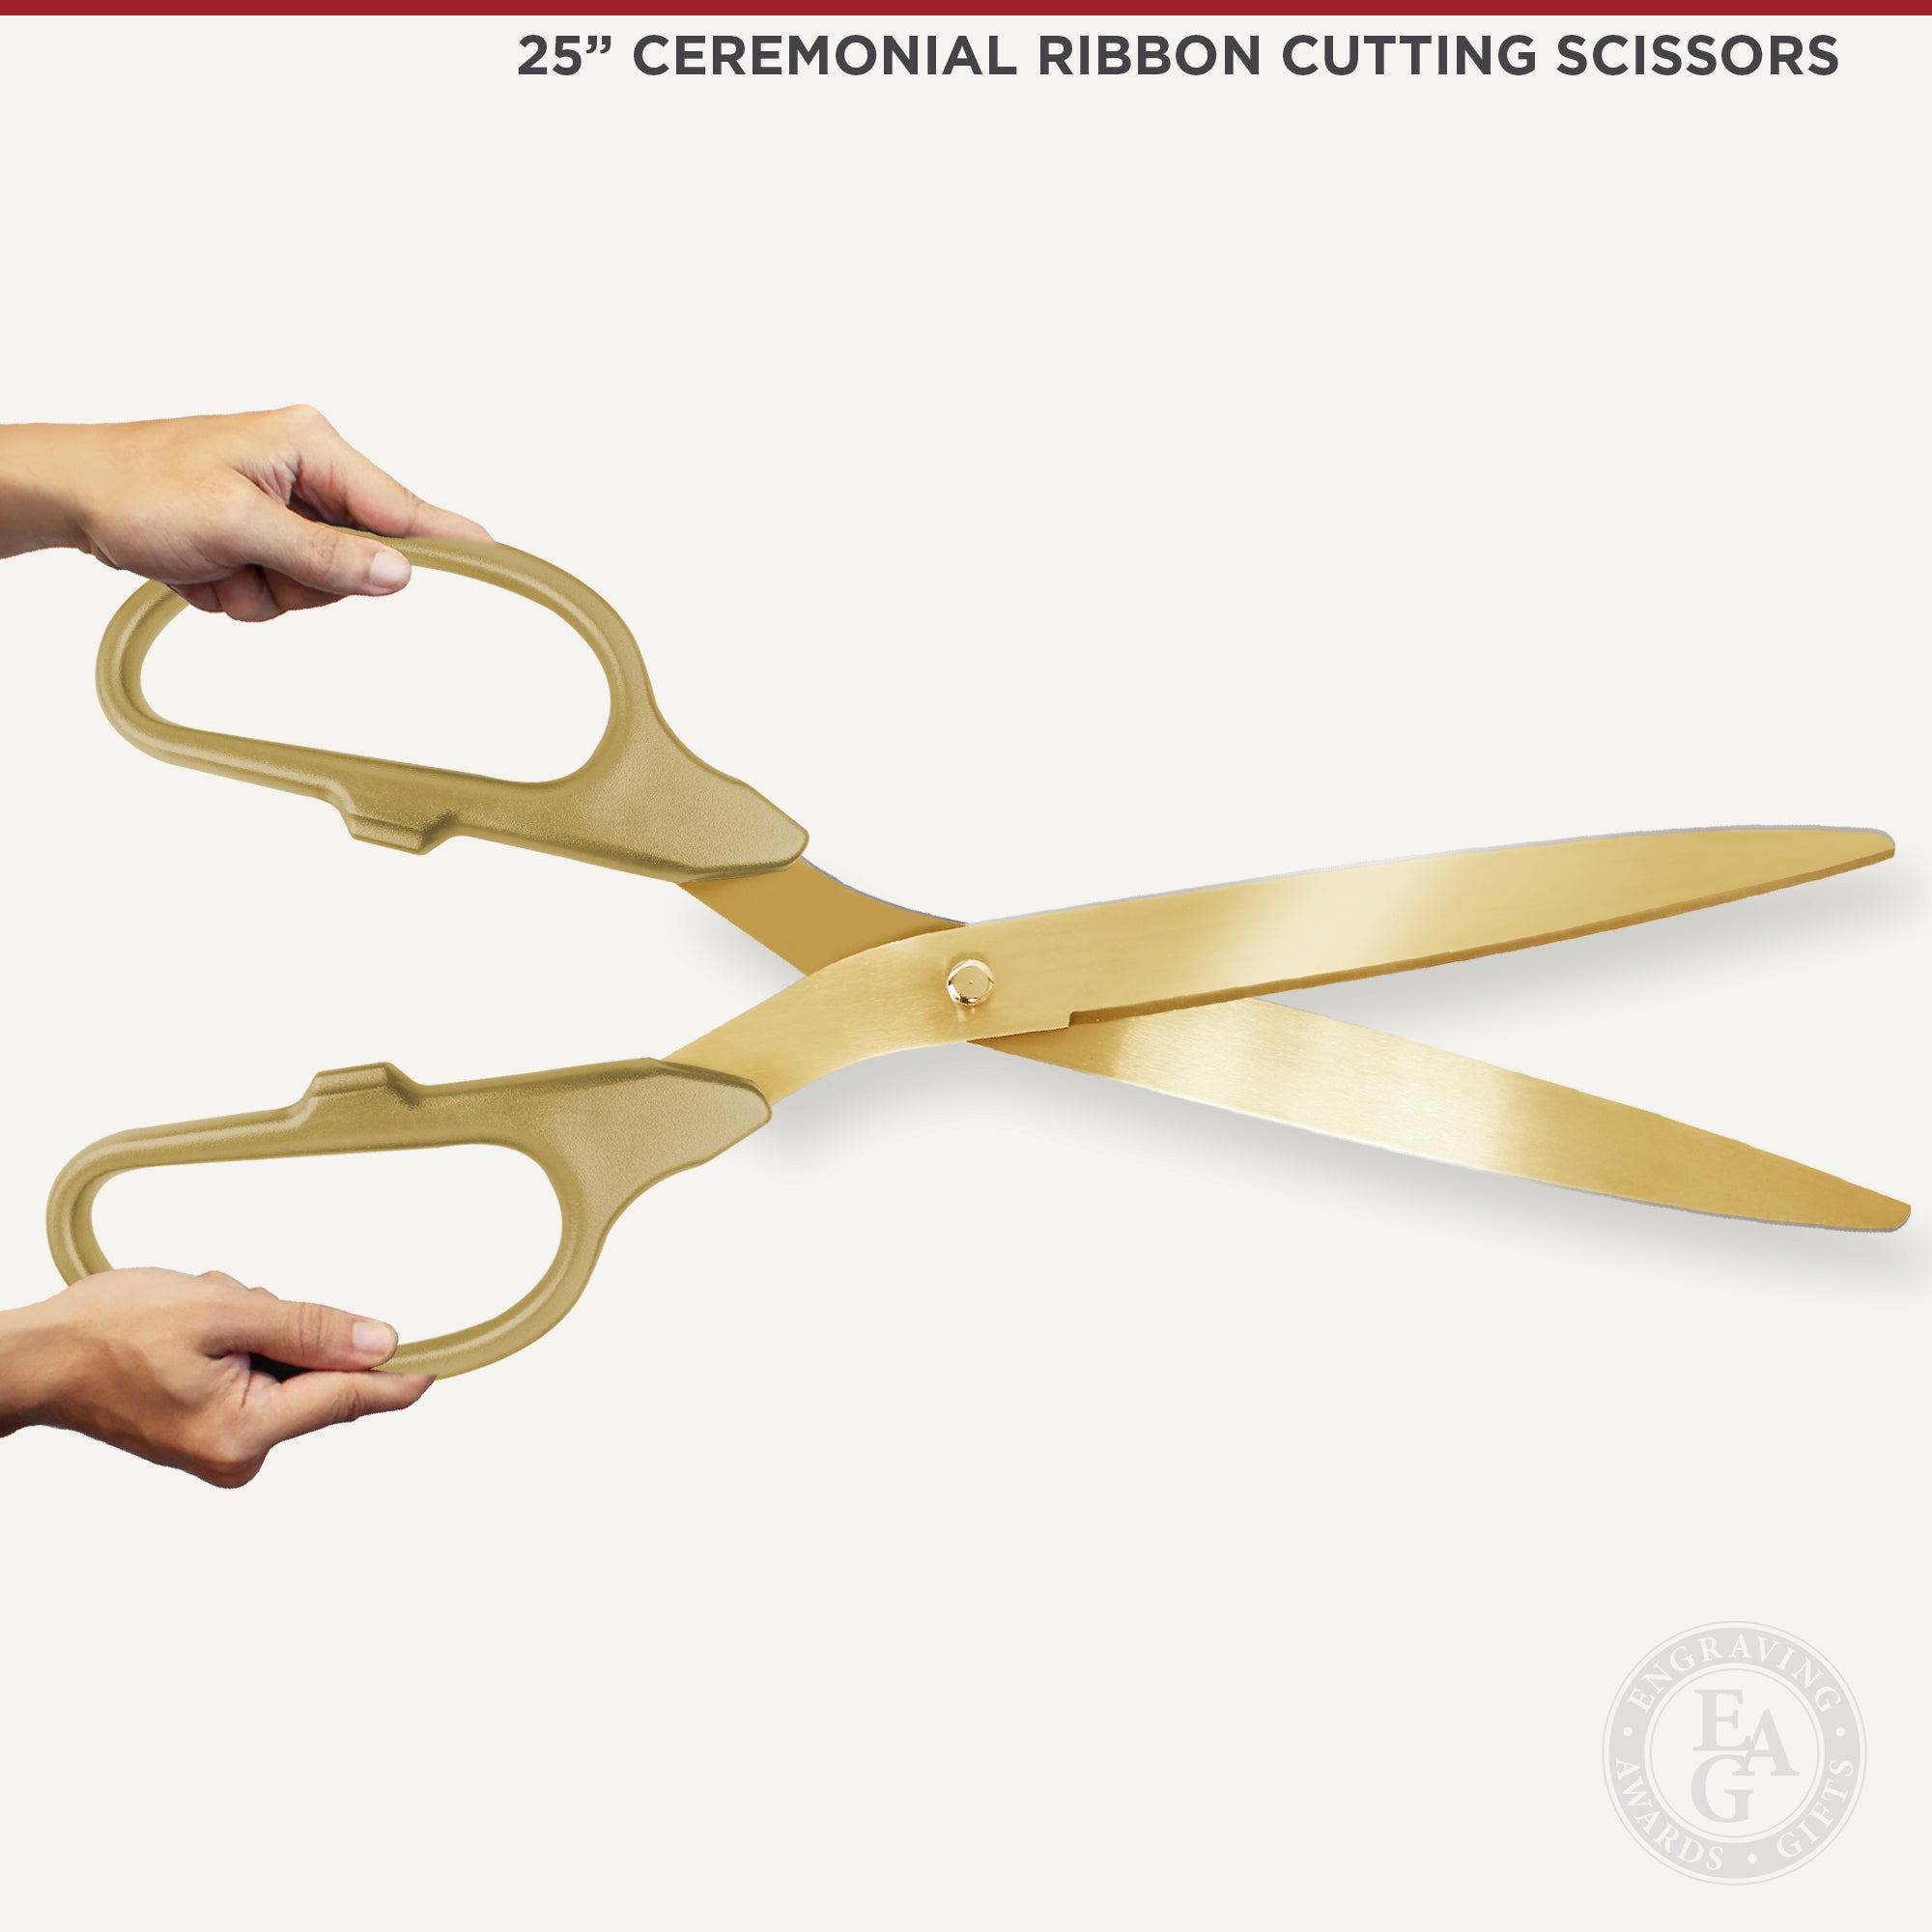 Custom Printed Giant Ceremonial Scissors and Ribbon